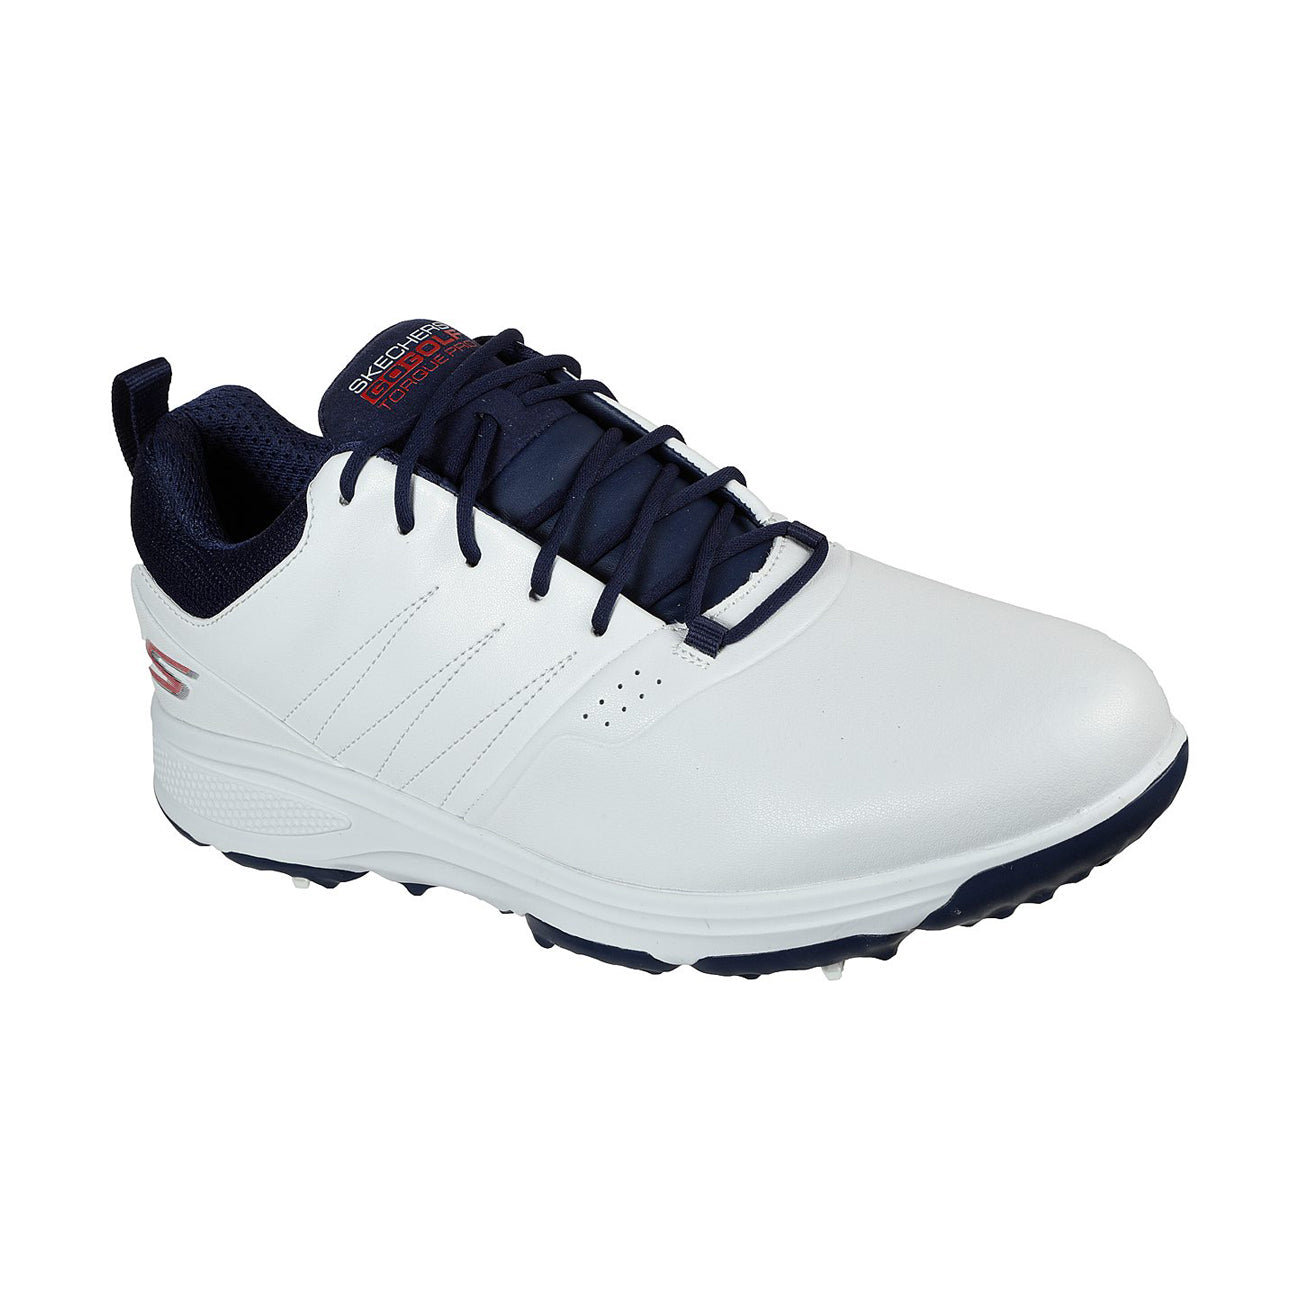 Skechers Go Golf Torque - Pro Golf Shoes 2021